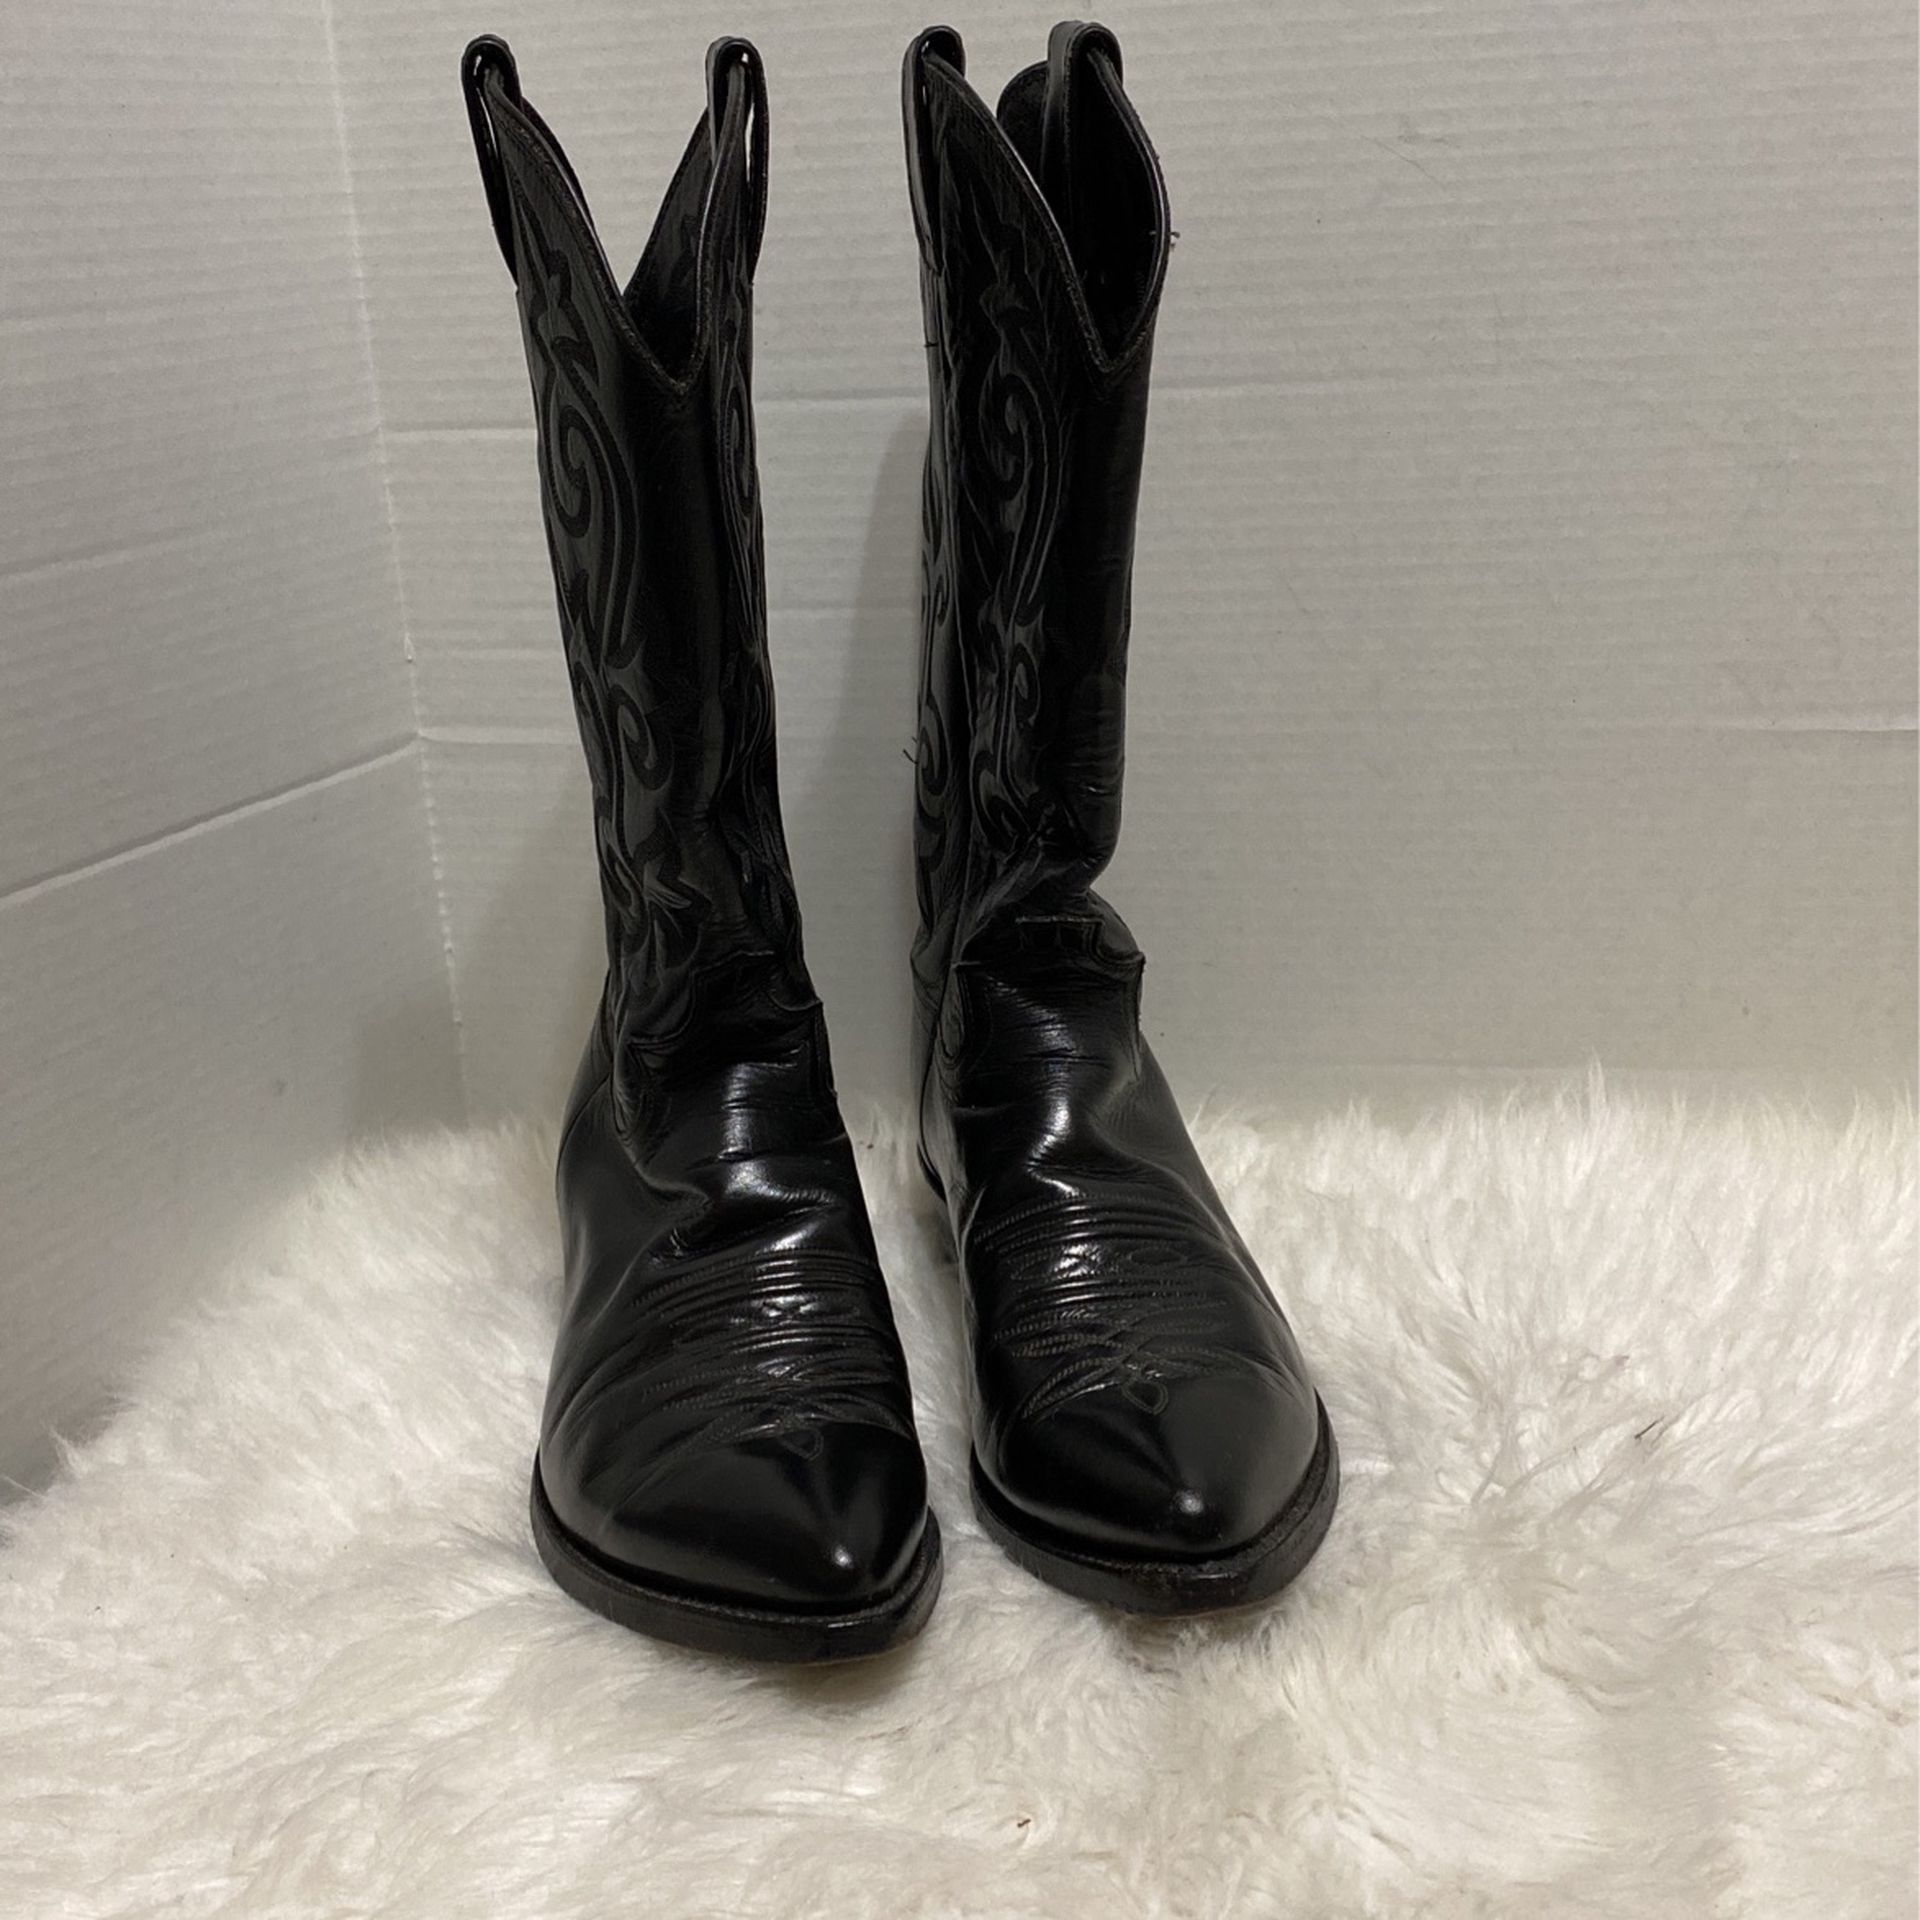 JUSTIN Boots Western Cowboy Corona 1434 Leather Black Men's 8.5 D